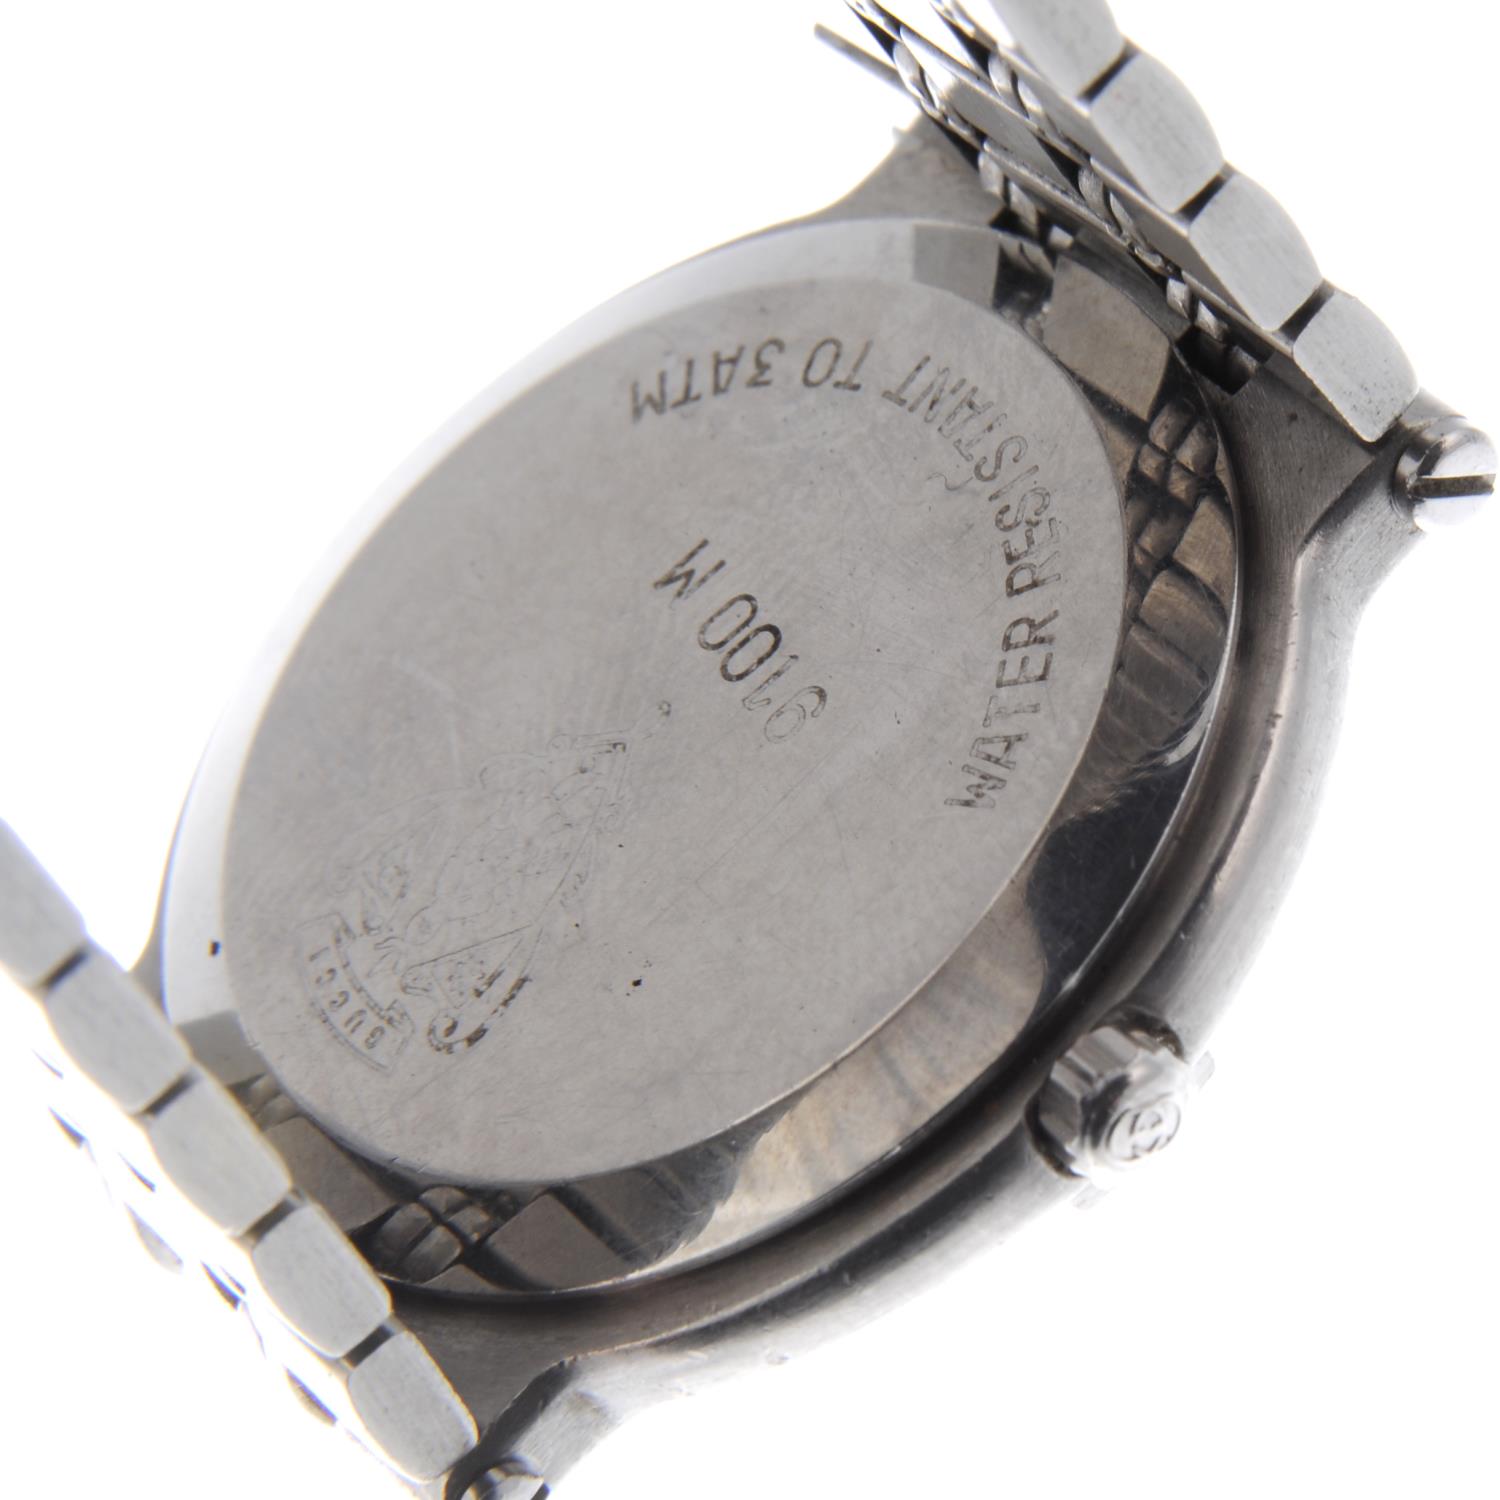 GUCCI - a gentleman's 9100M bracelet watch. - Image 3 of 4